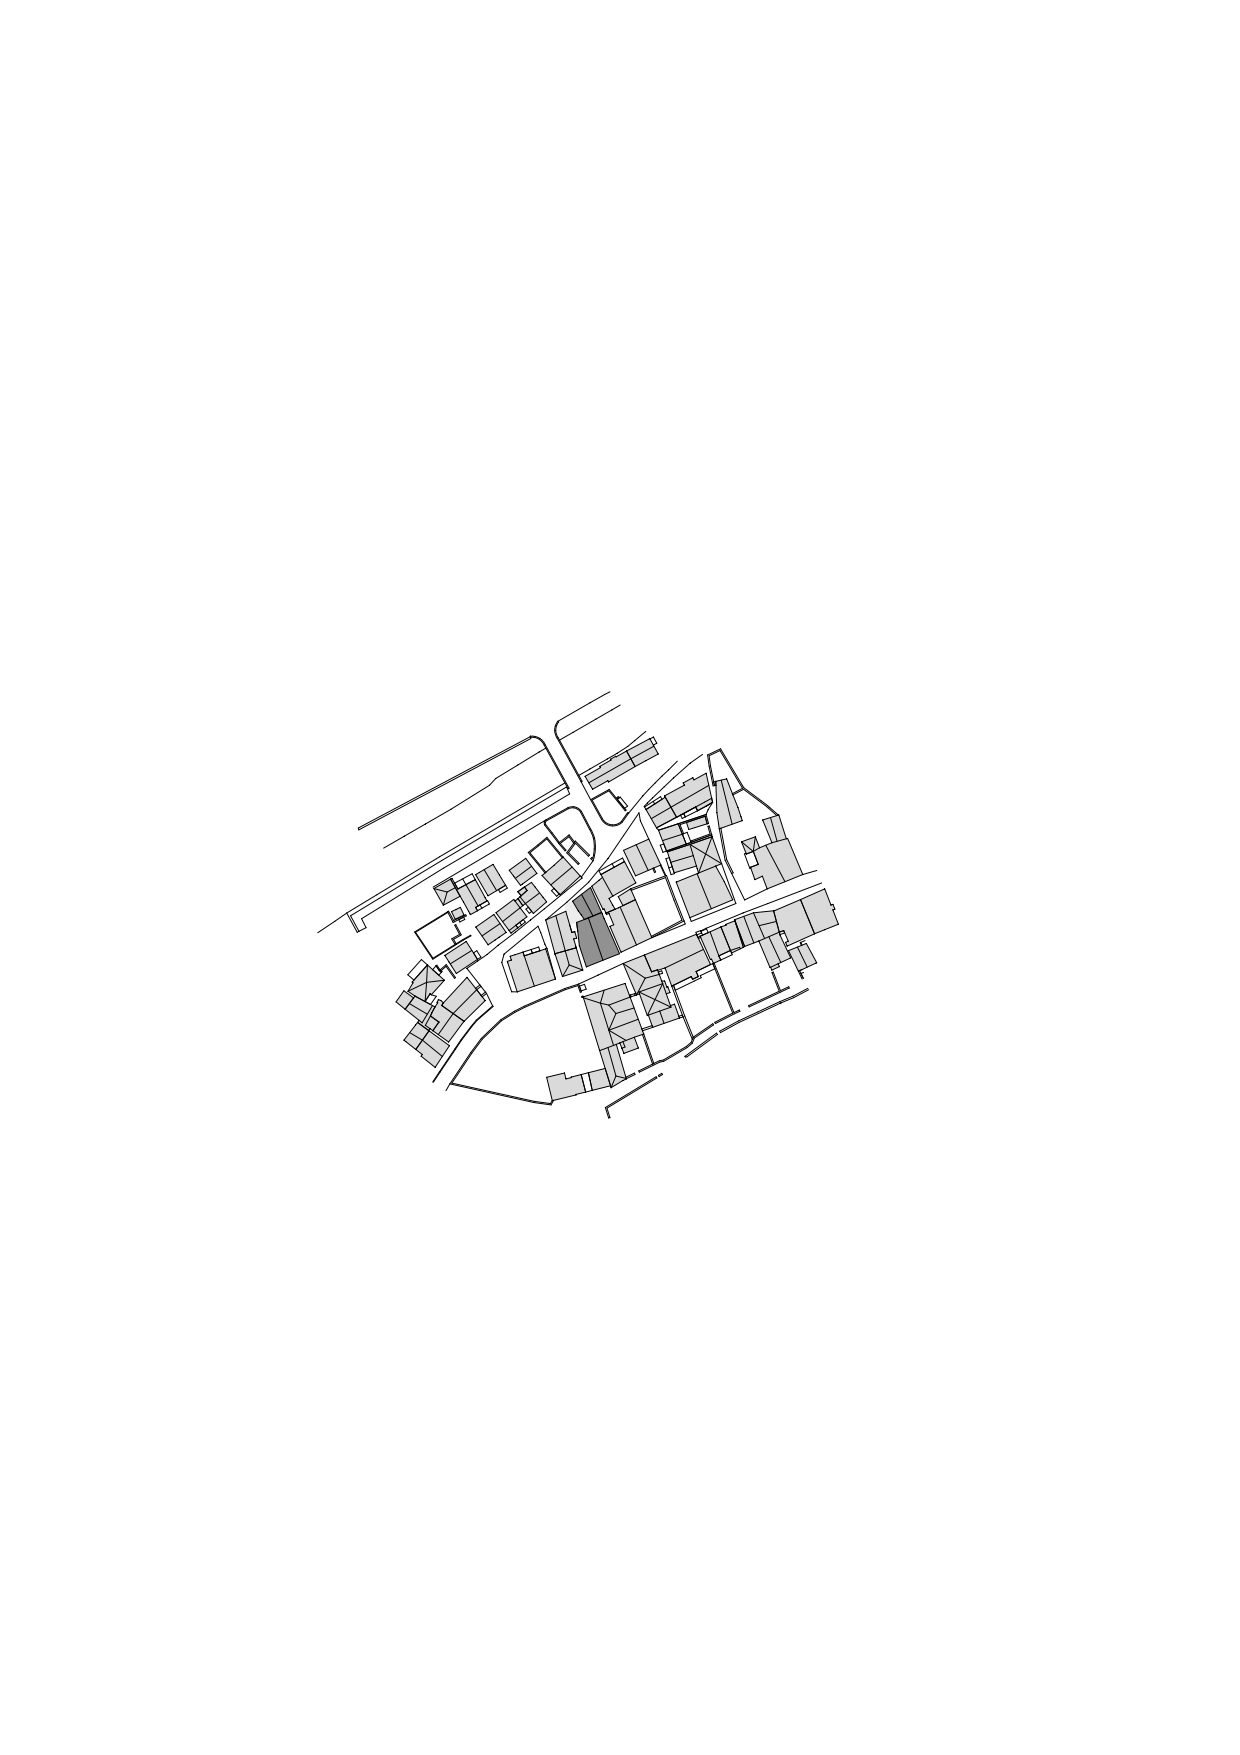 Plan drawing of Casa S Vicosoprano